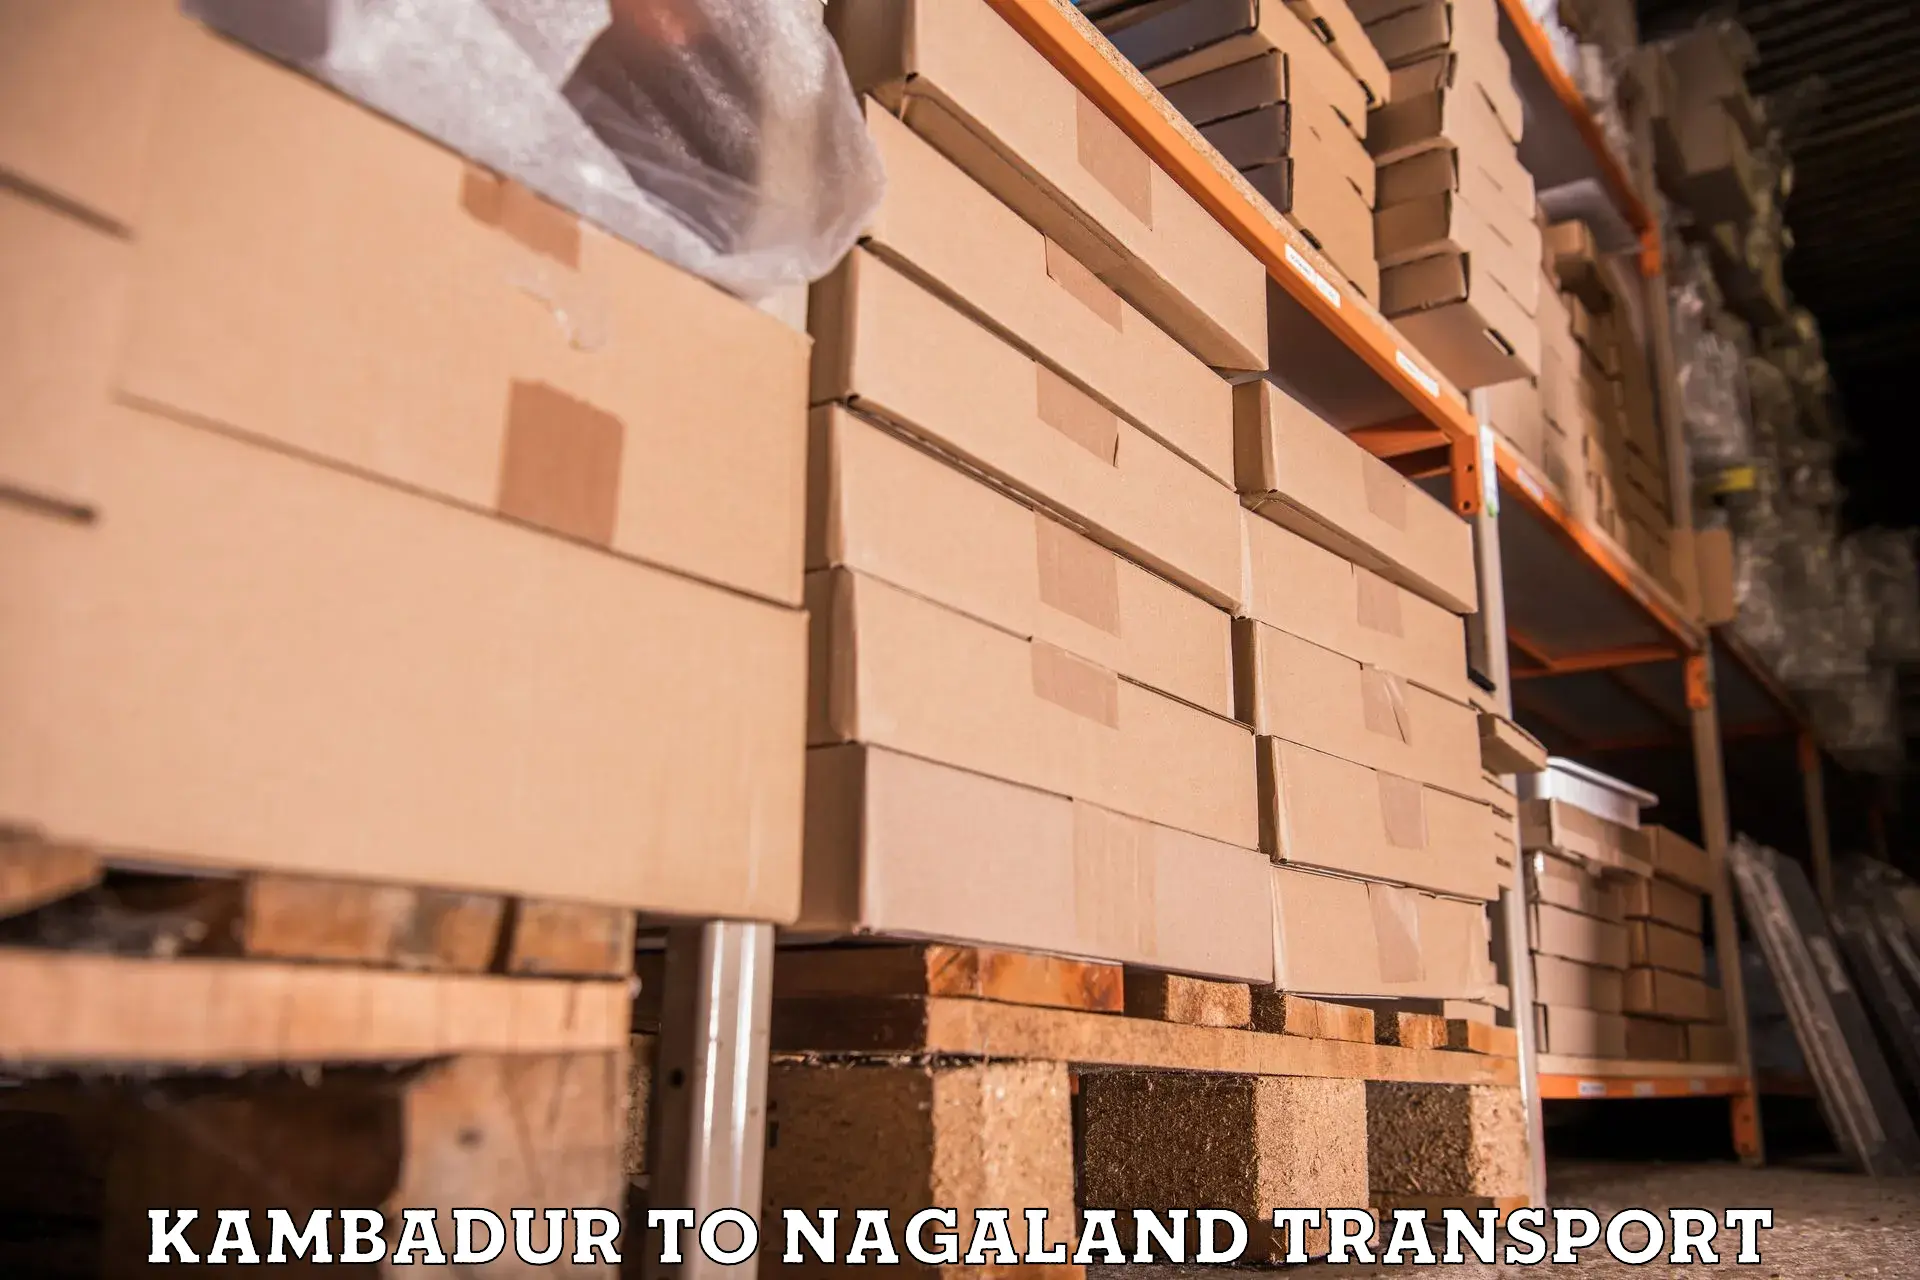 Container transport service Kambadur to Nagaland